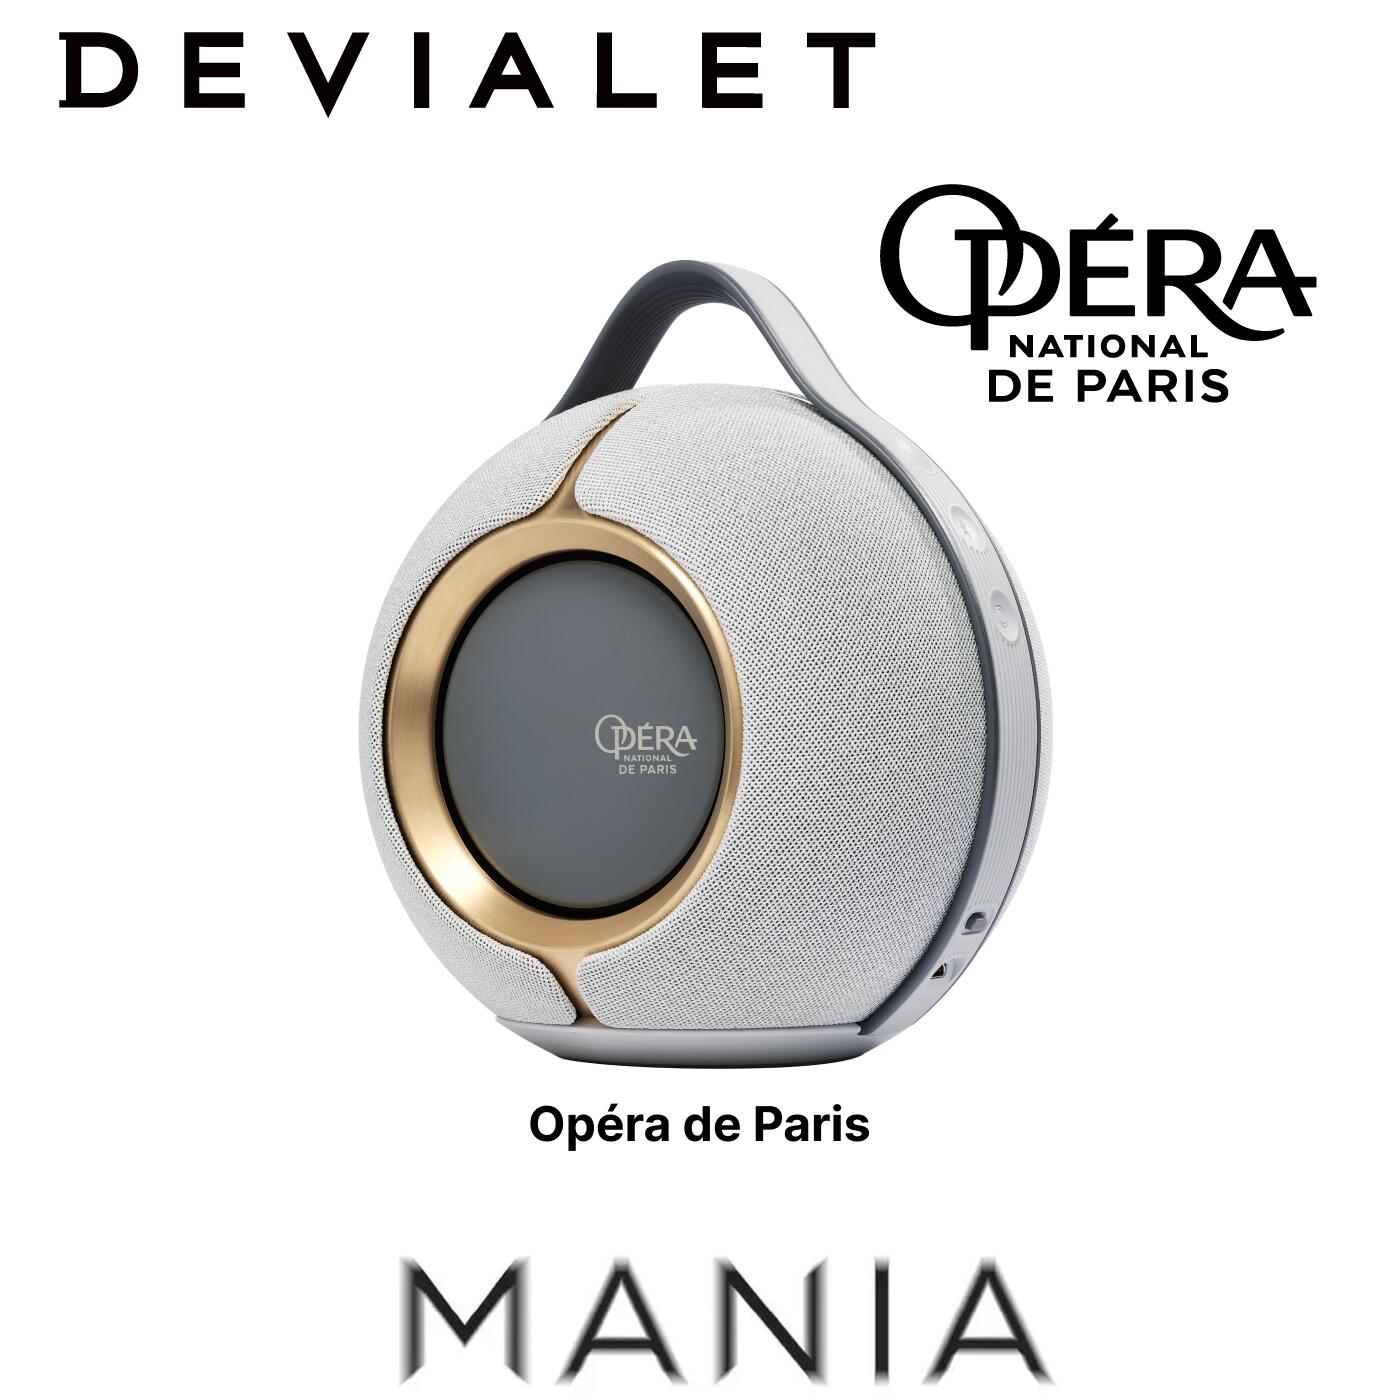 DEVIALET MANIA Opera de Paris ワイヤレススピーカー デビアレ マニア オペラ座 特別モデル国内正規代理店